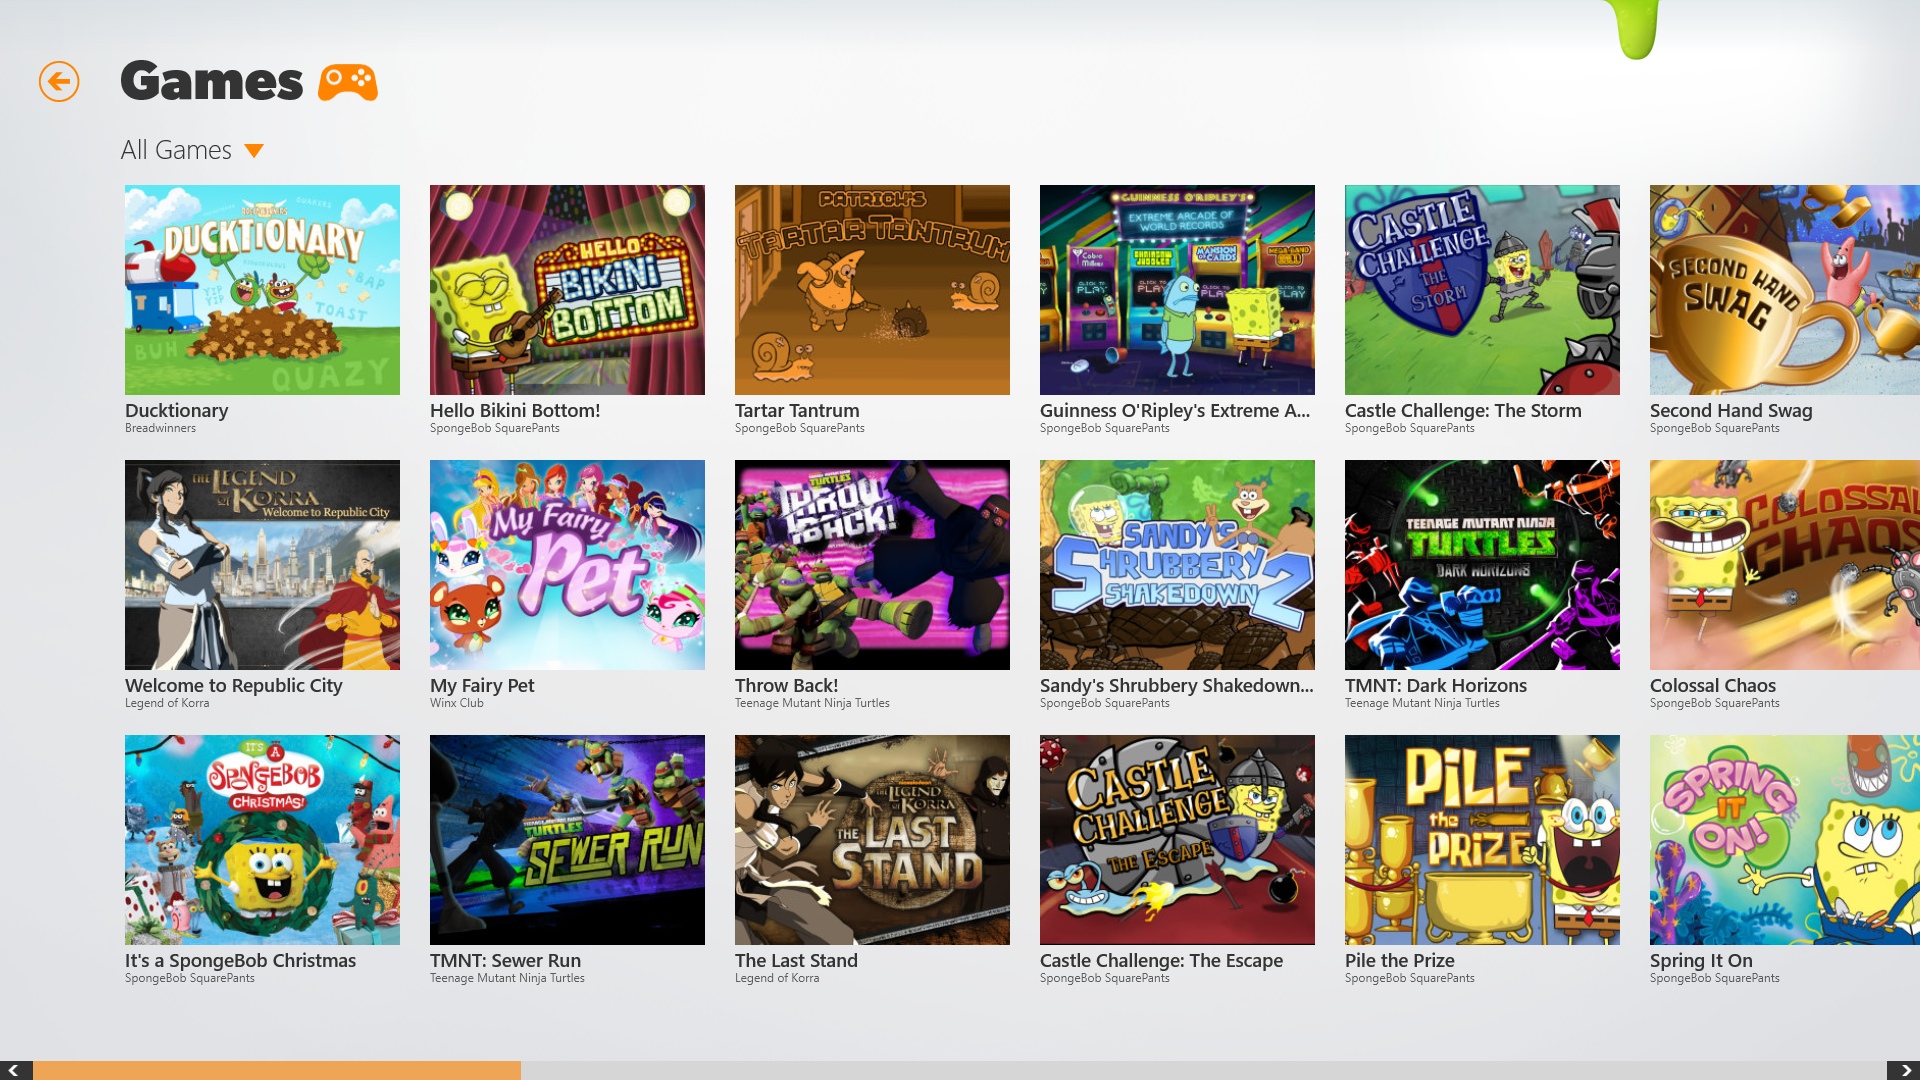 Nickelodeon Games Windows 8